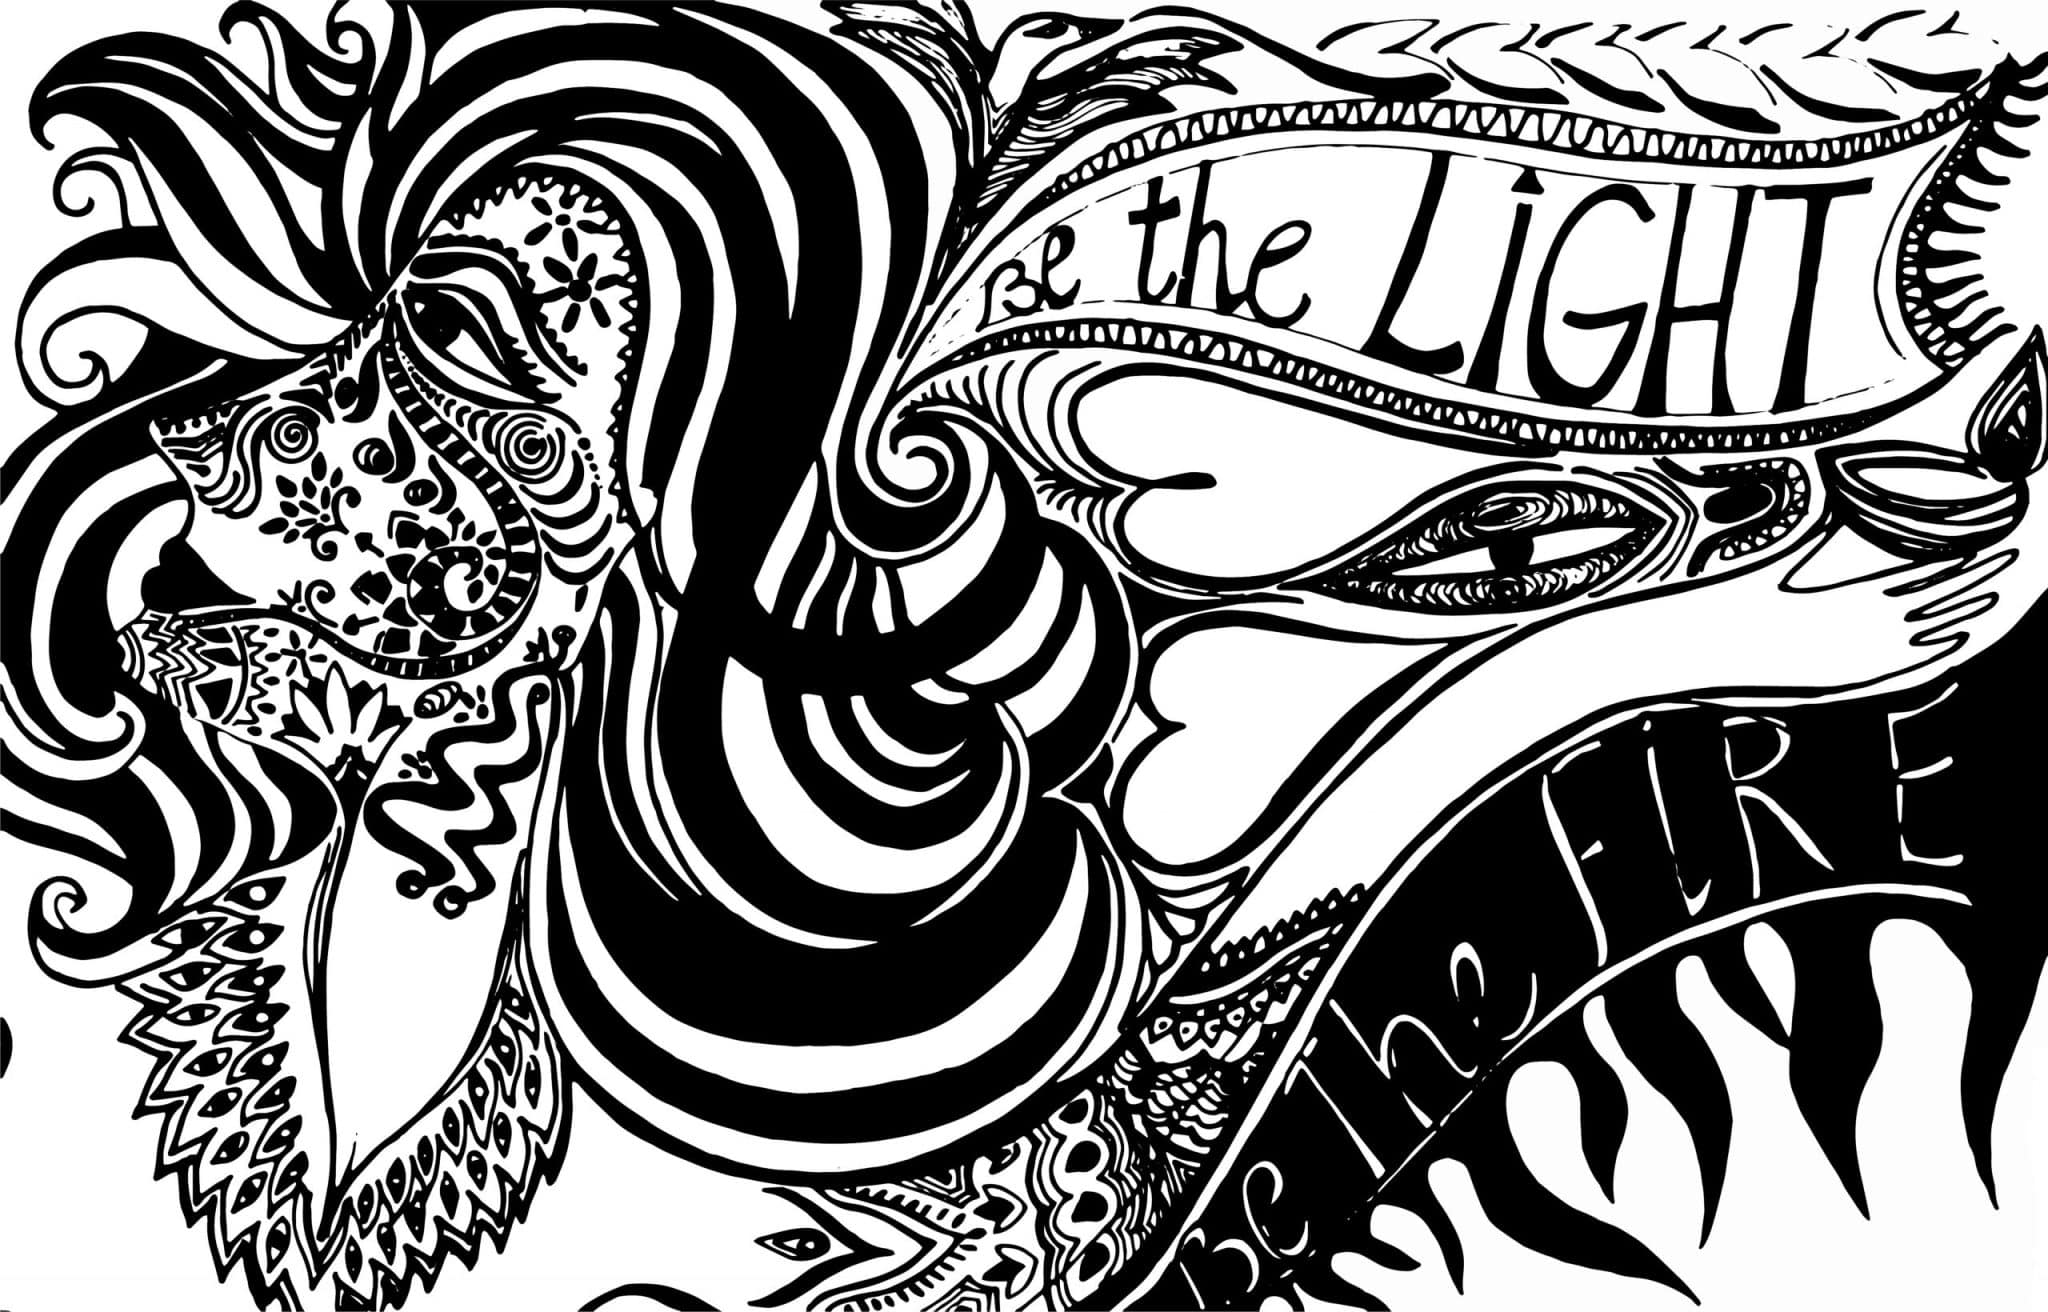 Be the Light Art